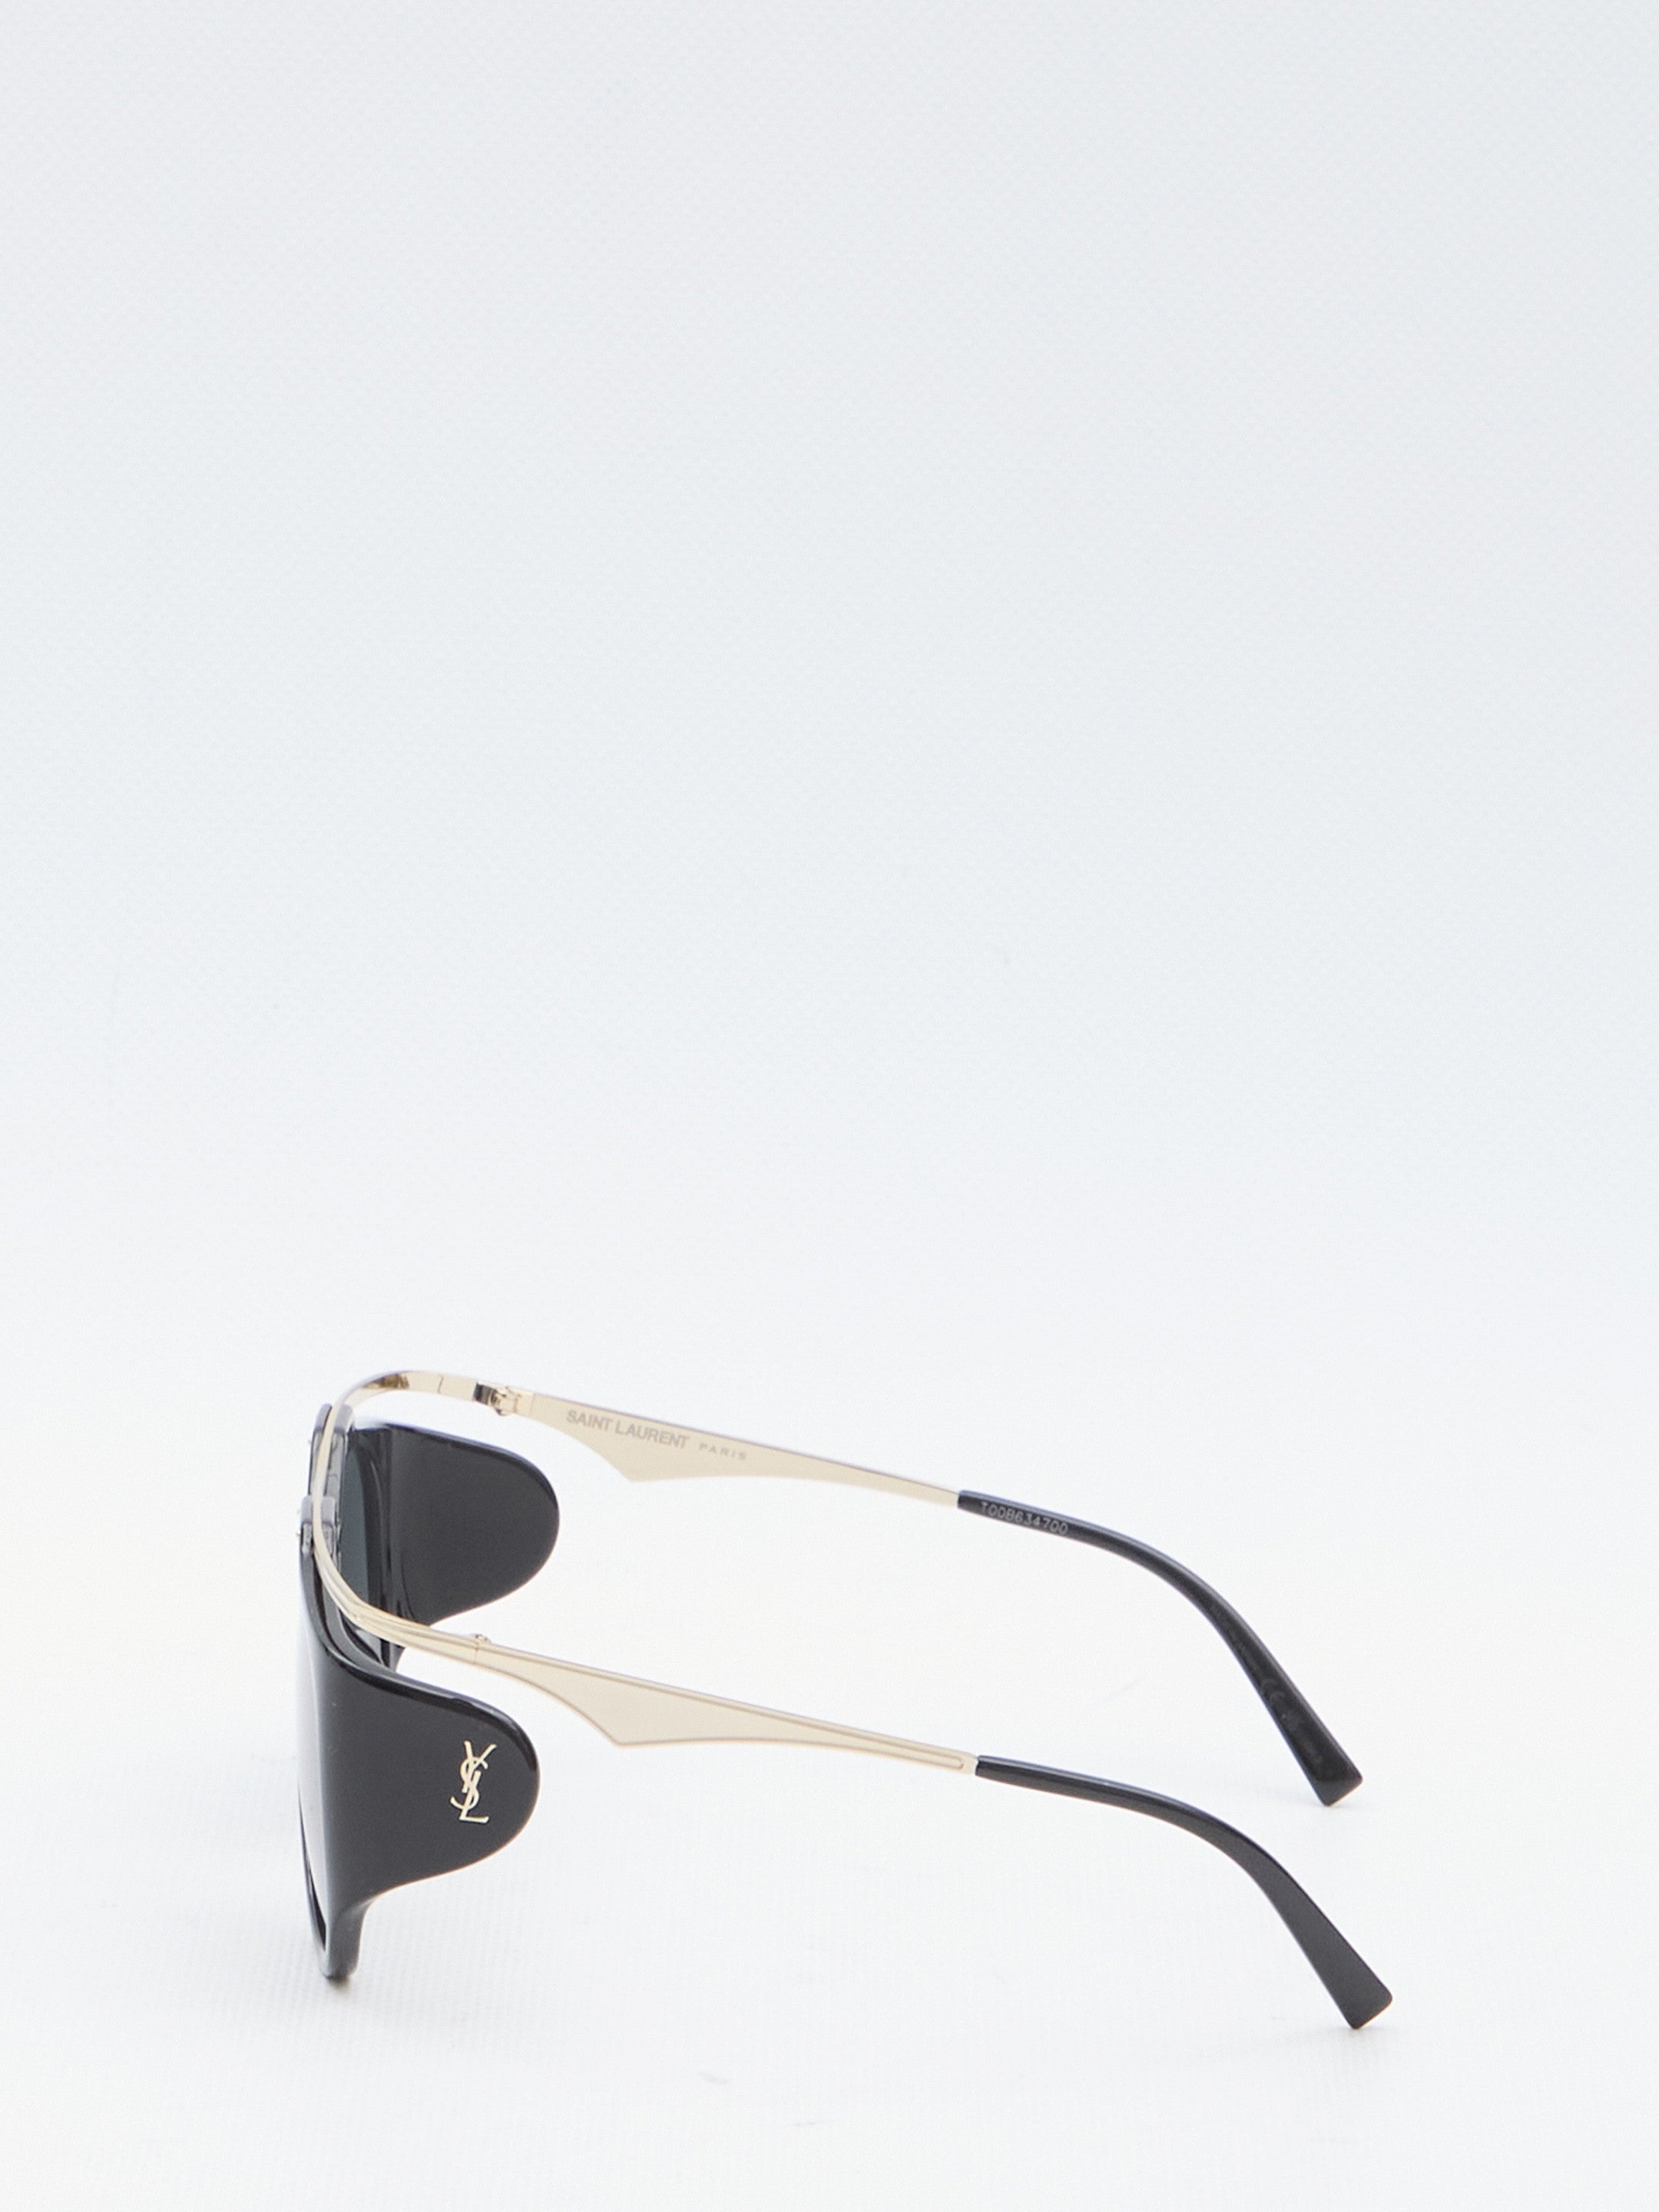 SL M137 Amelia sunglasses